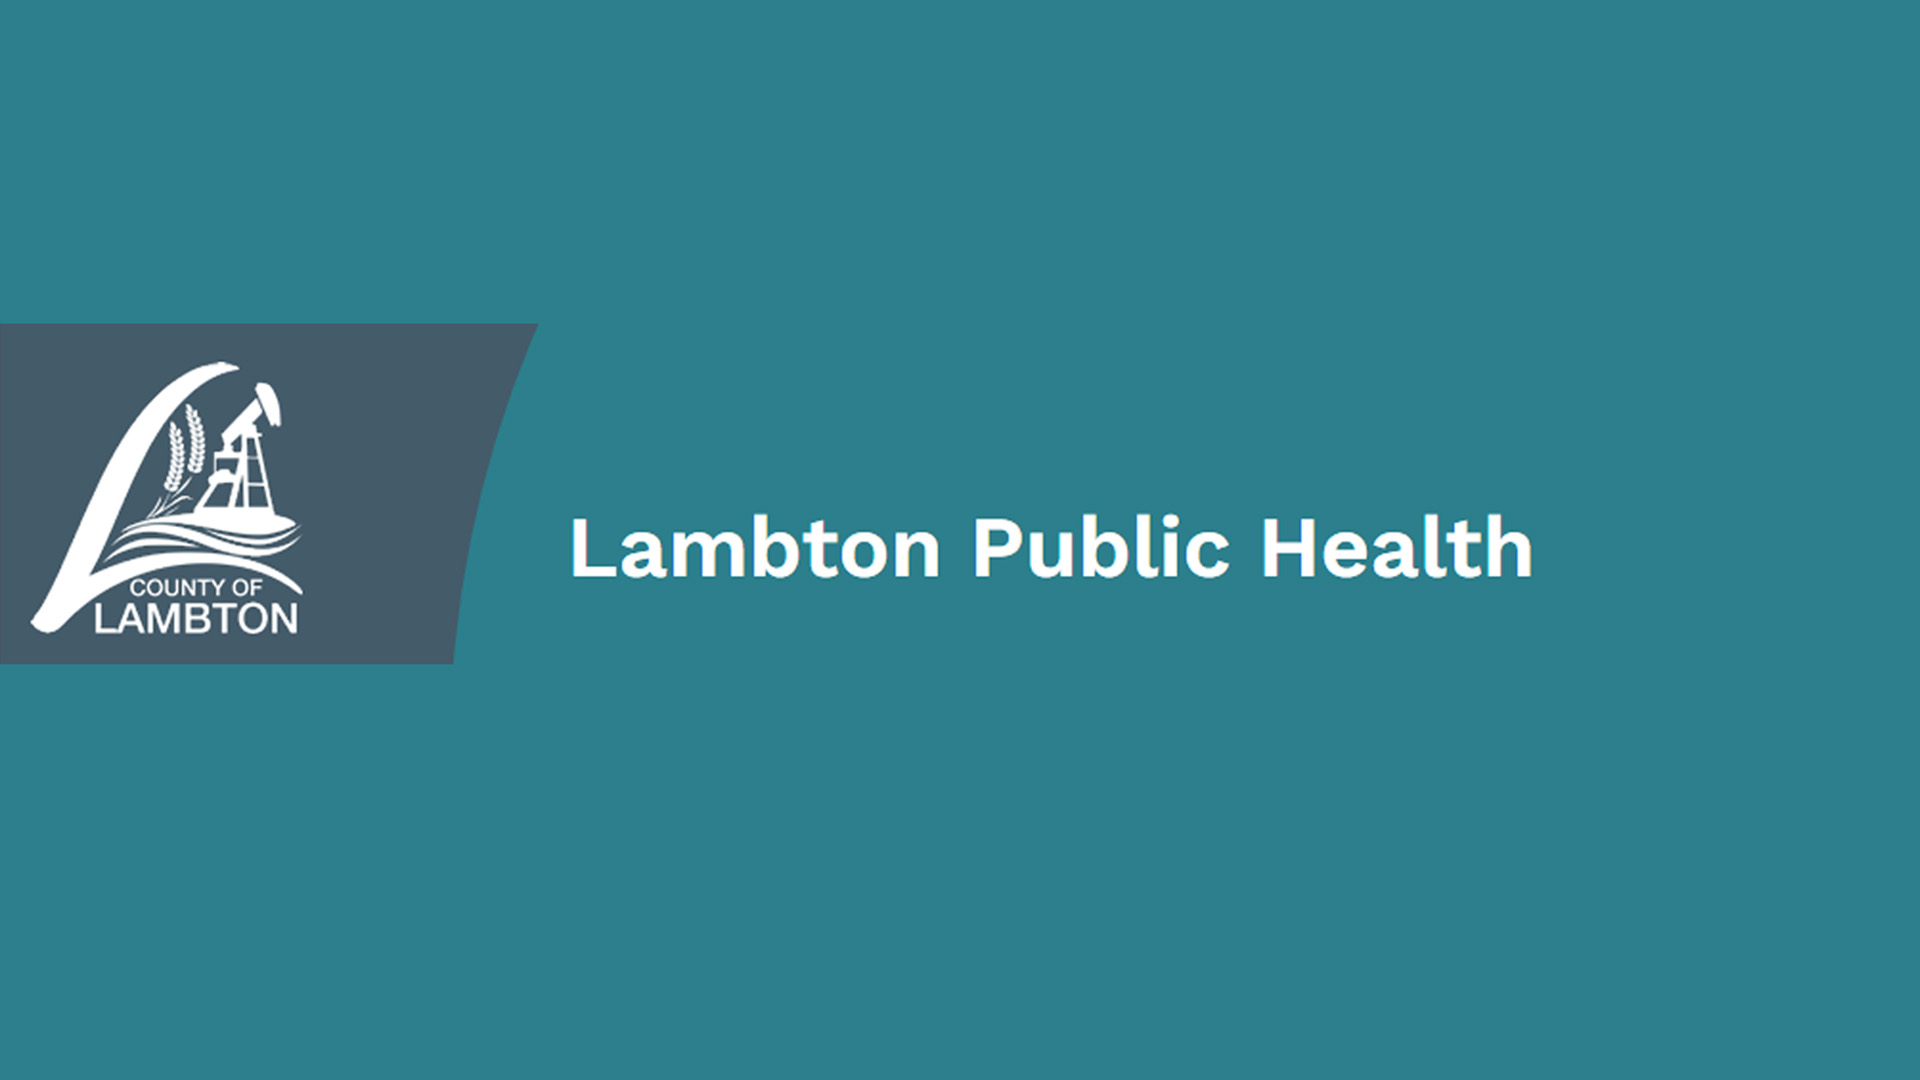 <em><a href="https://newsdesk.st-clair.net/2023/02/15/important-information-from-lambton-public-health-regarding-secondary-school-vaccination-clinics-for-students-in-sarnia-lambton/"><em>Important Information from Lambton Public Health Regarding <strong>Secondary School Vaccination Clinics</strong> for Students in Sarnia-Lambton</em></a></em>